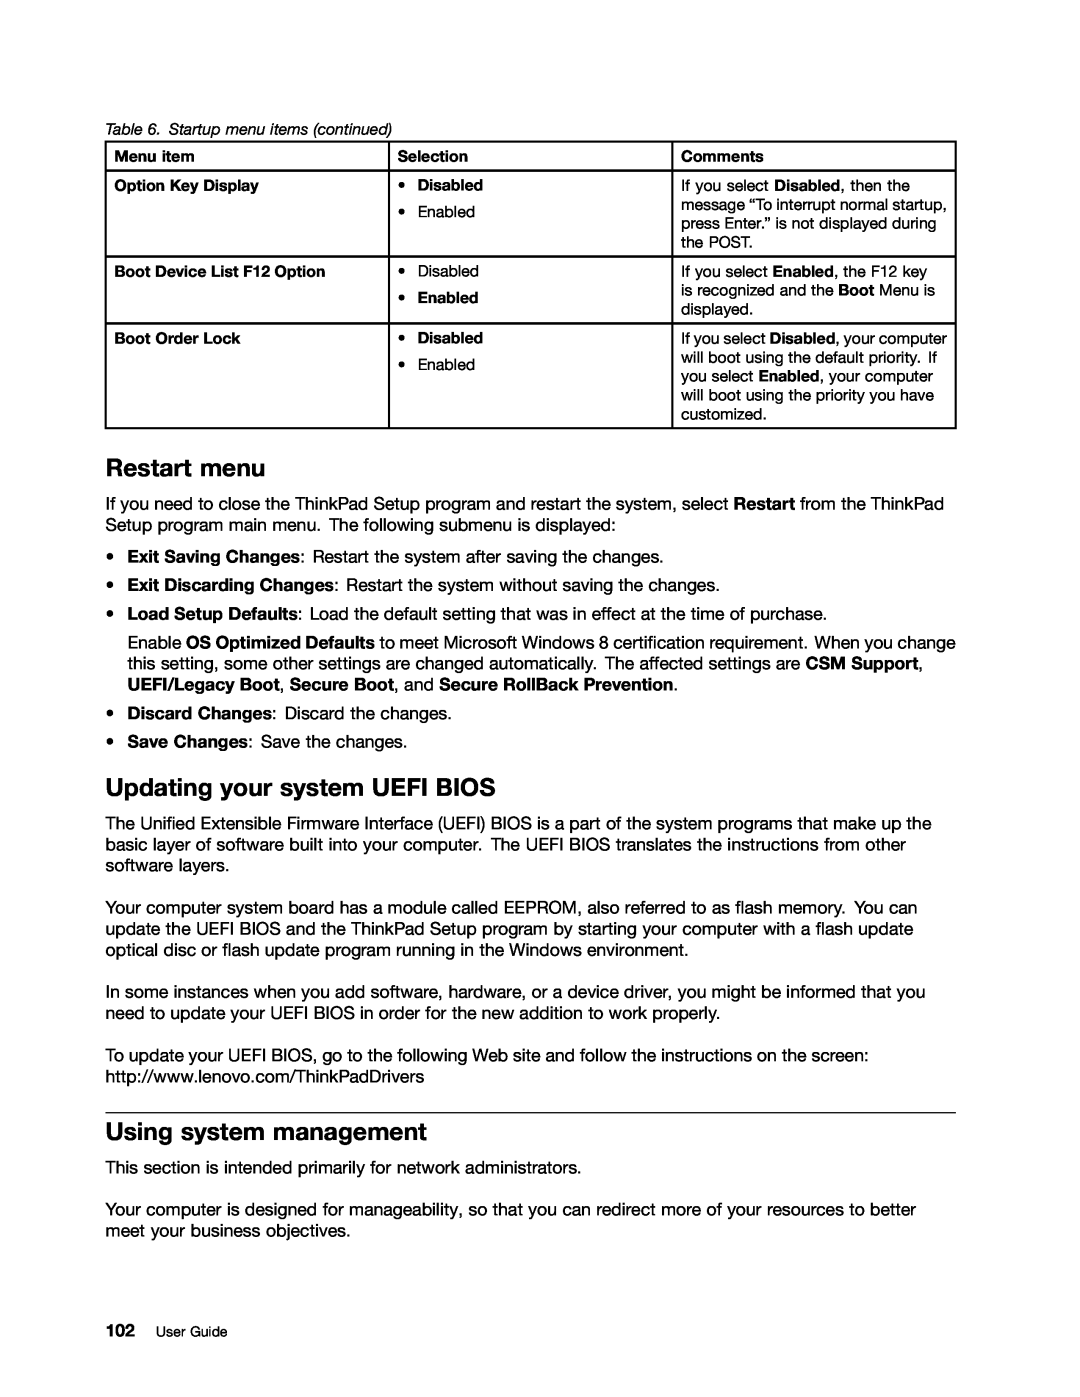 Lenovo X131E manual Restart menu, Updating your system UEFI BIOS, Using system management 